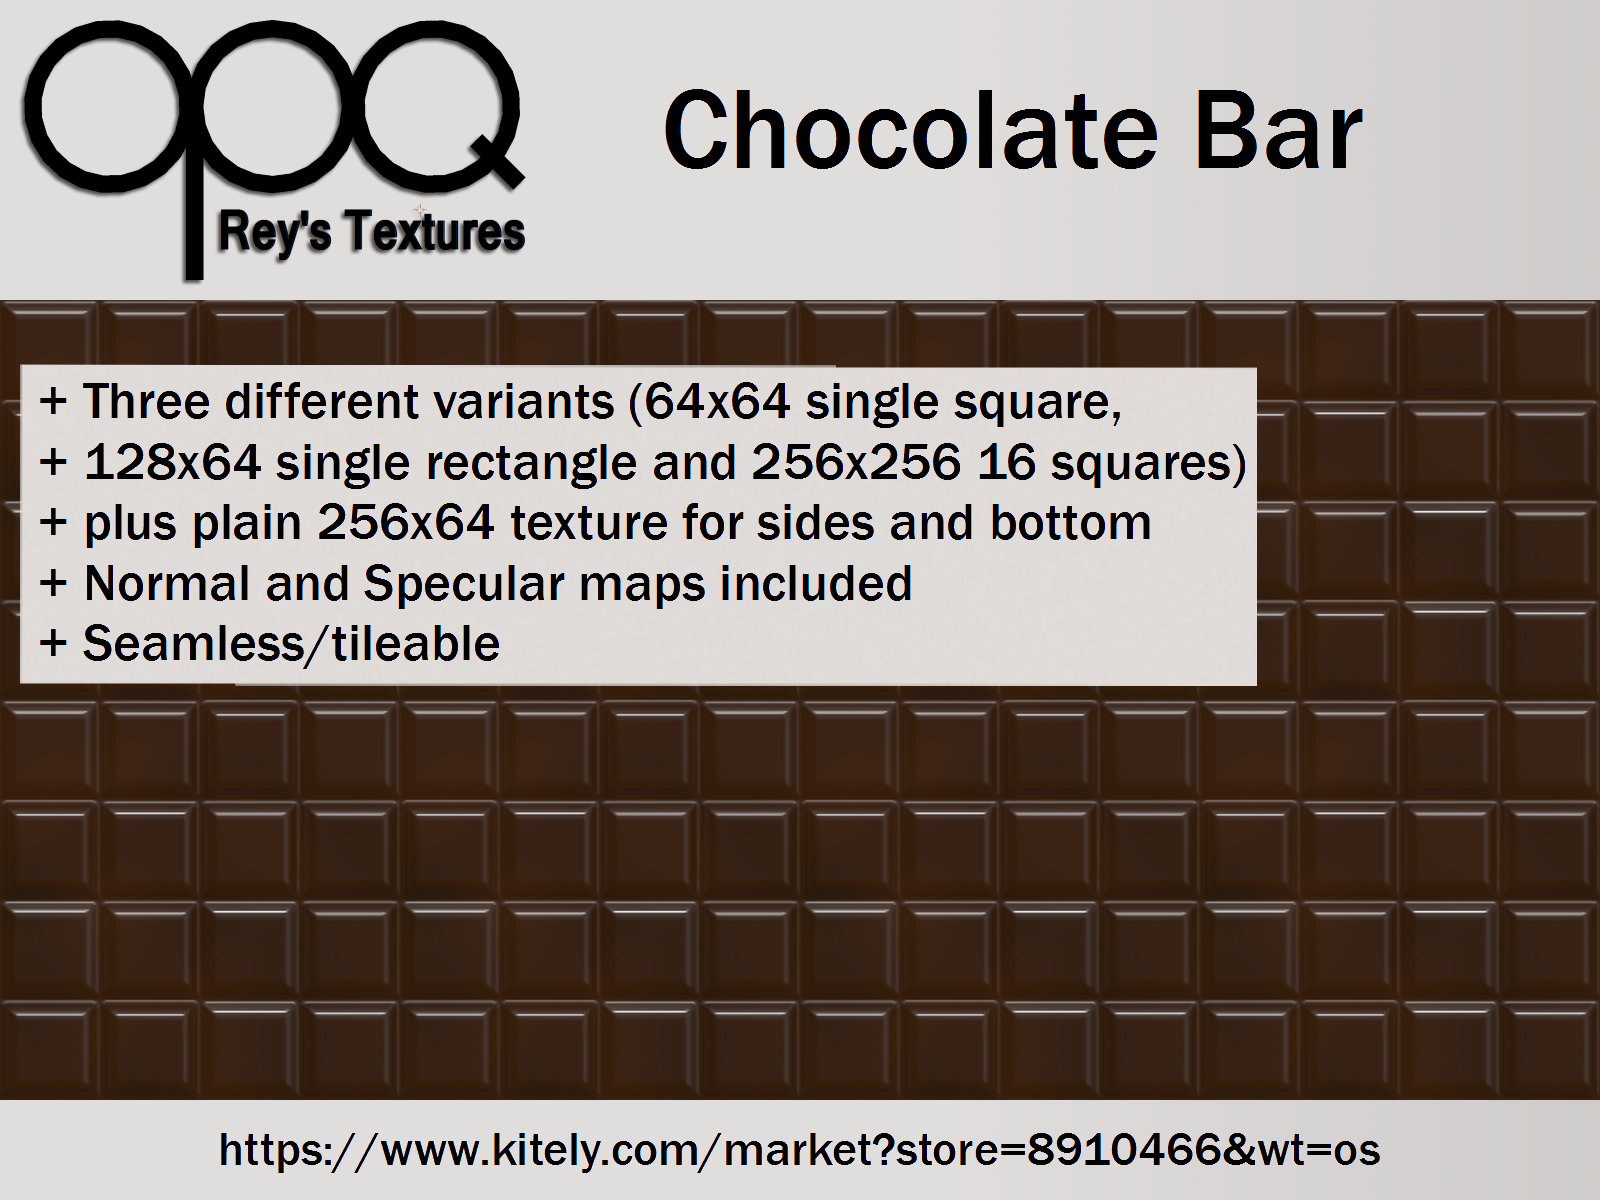 Rey's Chocolate Bar Poster Kitely.jpg